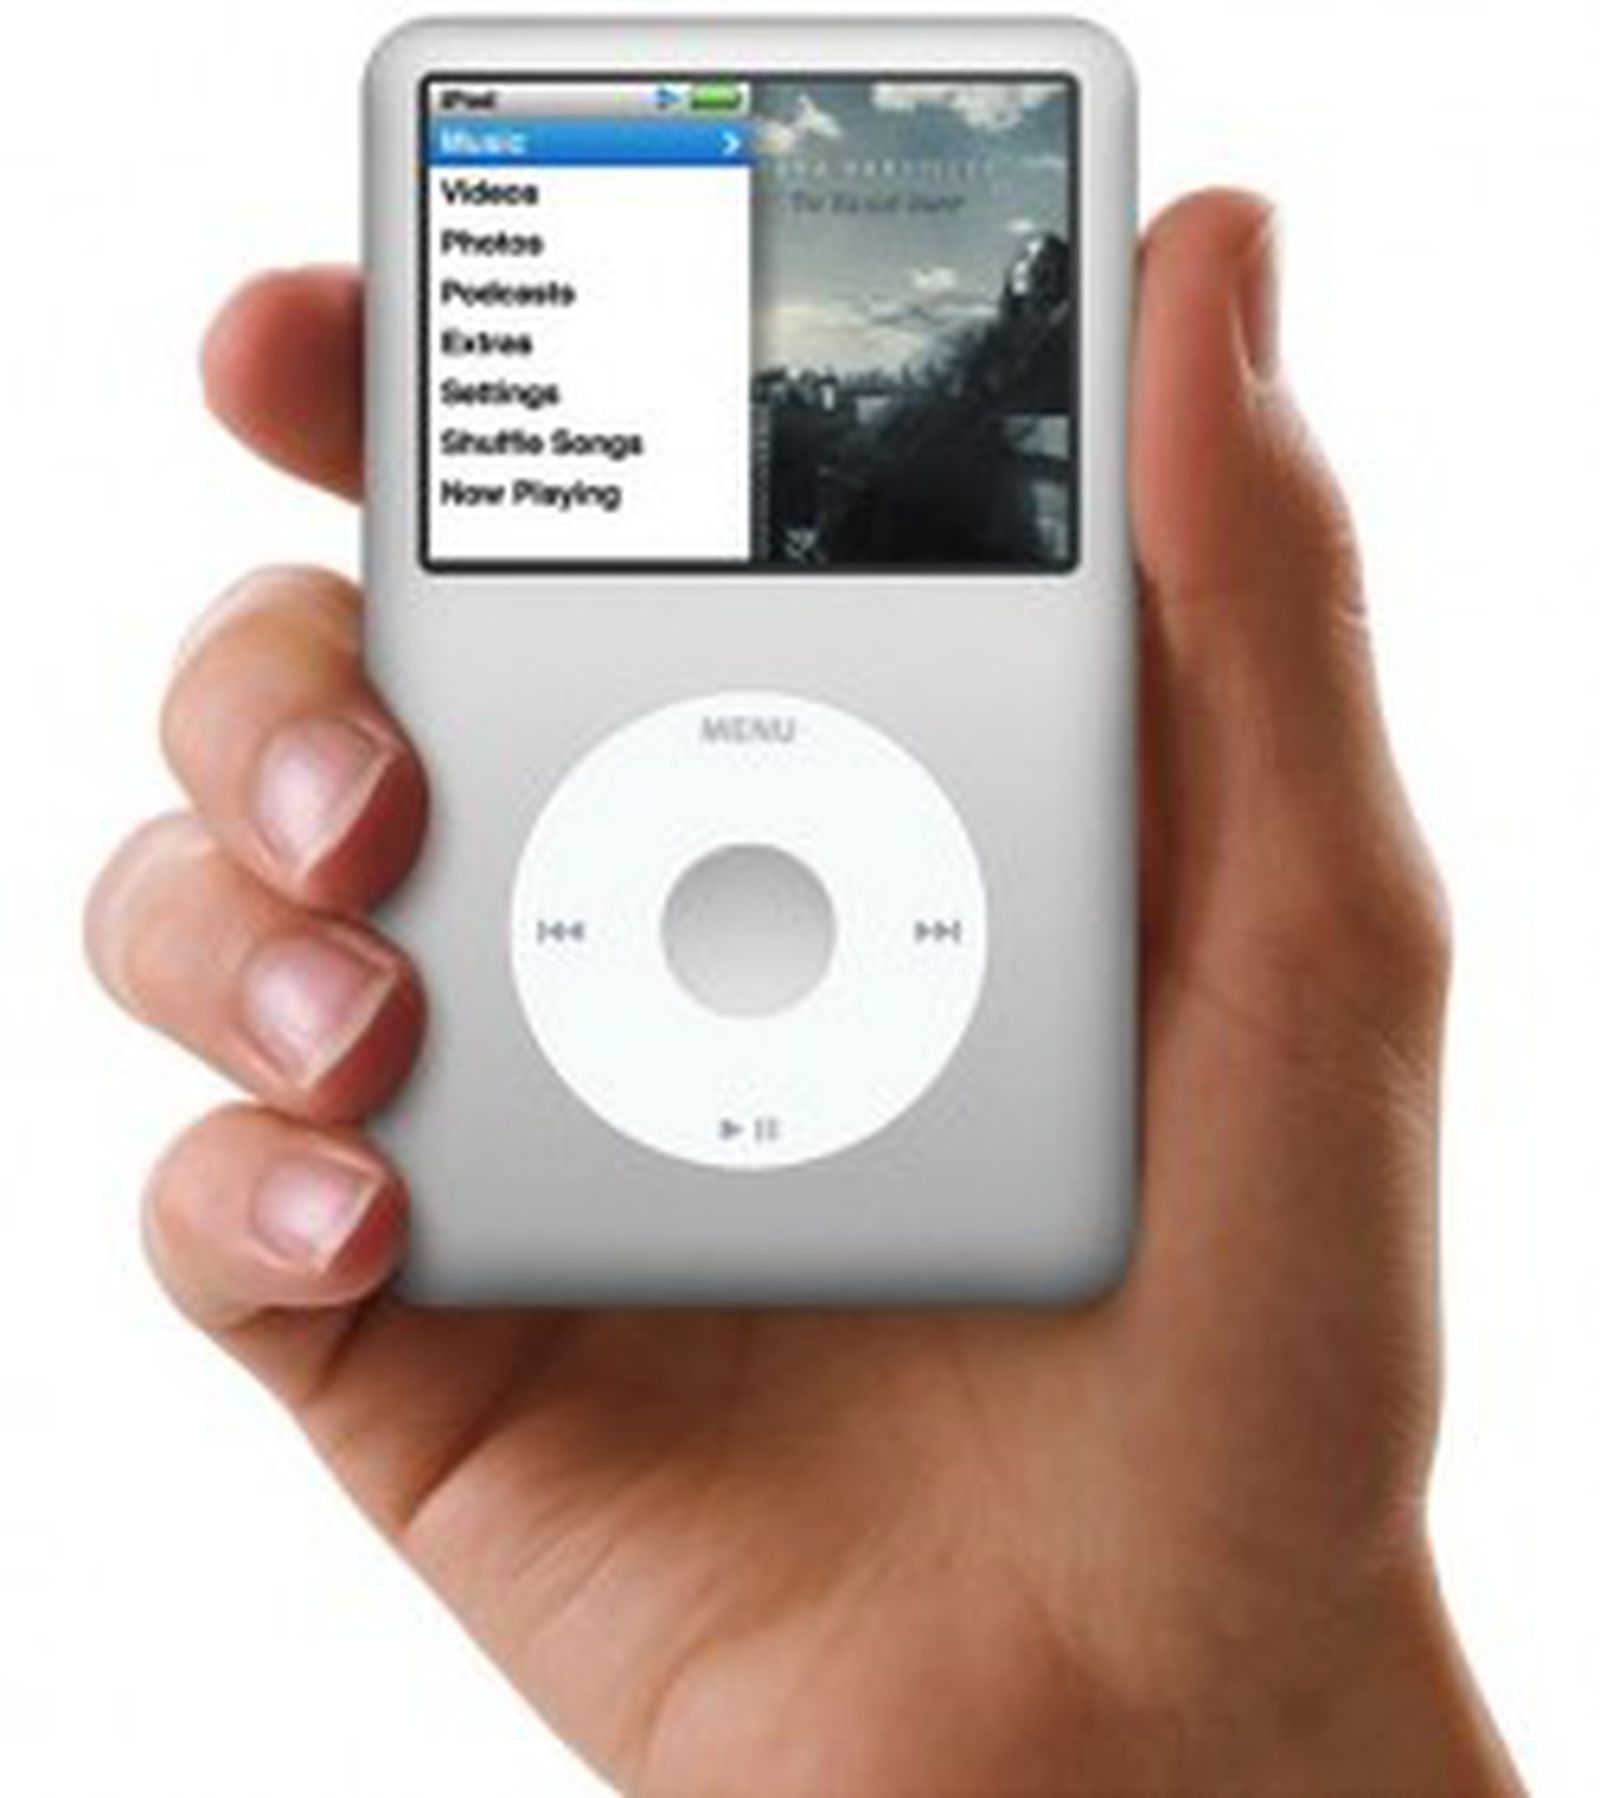 iPod classic: Everything We Know | MacRumors